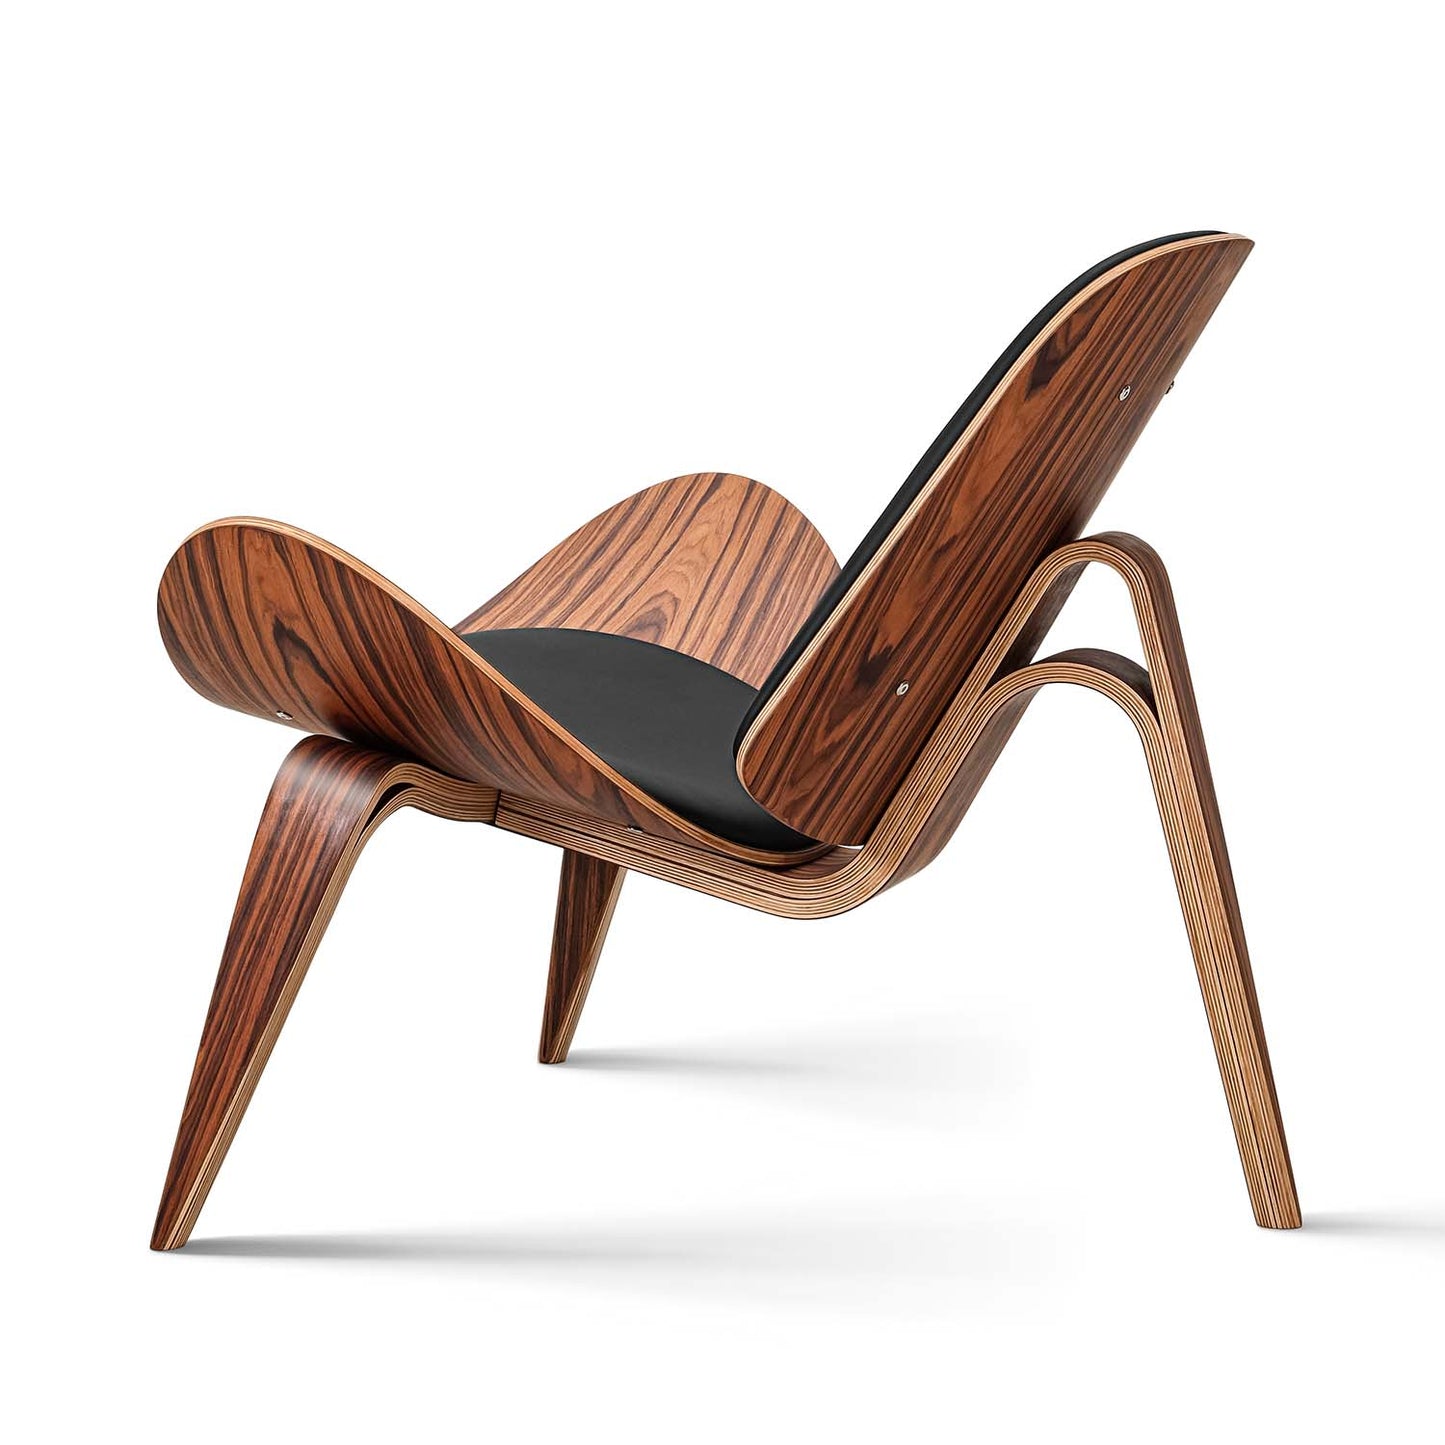 Arthia Designs - Hans Wegner's Three-Legged Shell Chair - Review